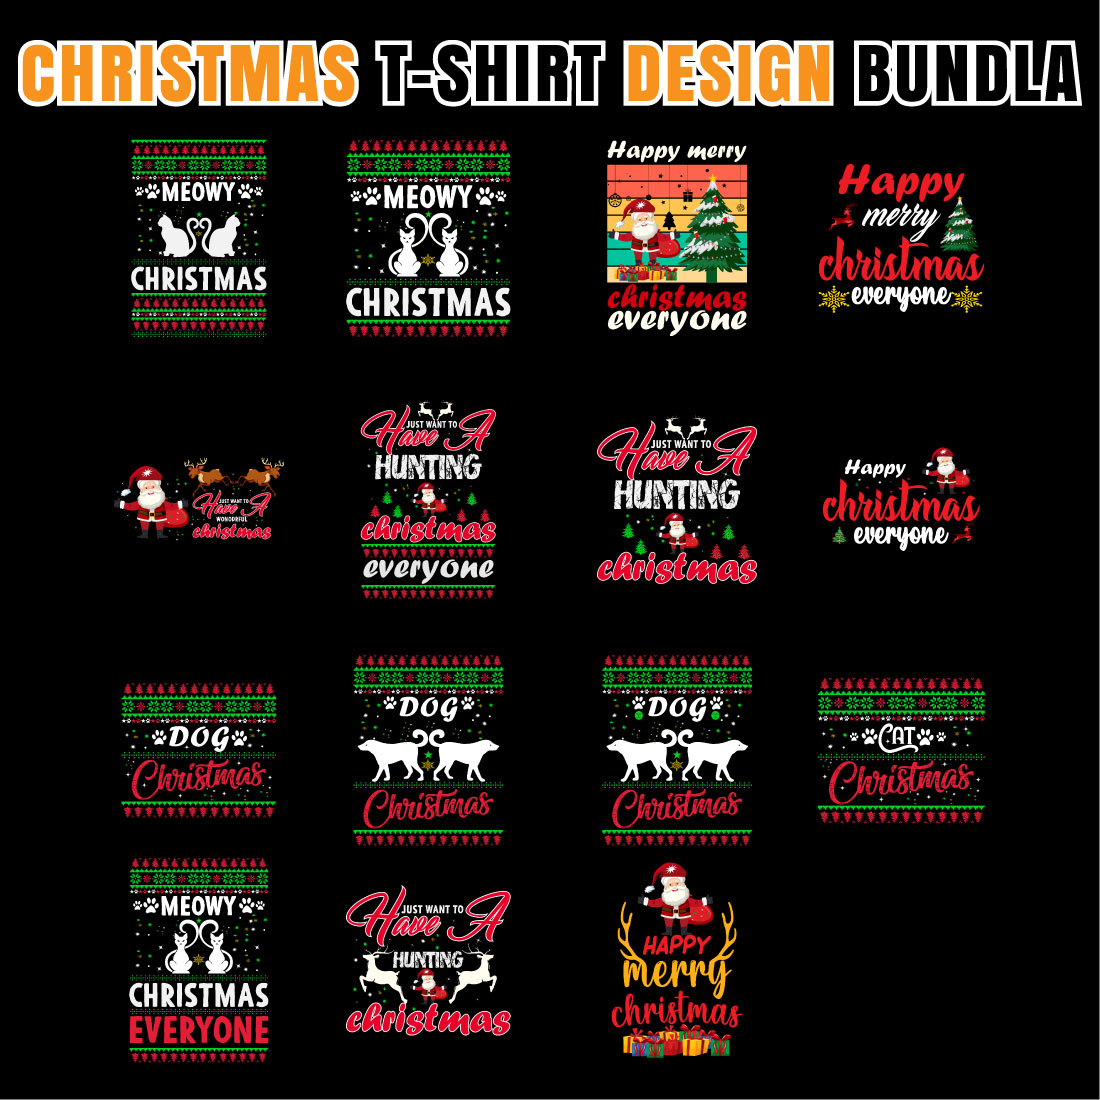 Christmas T-shirt Print Ready Designs Bundle V.1 cover image.